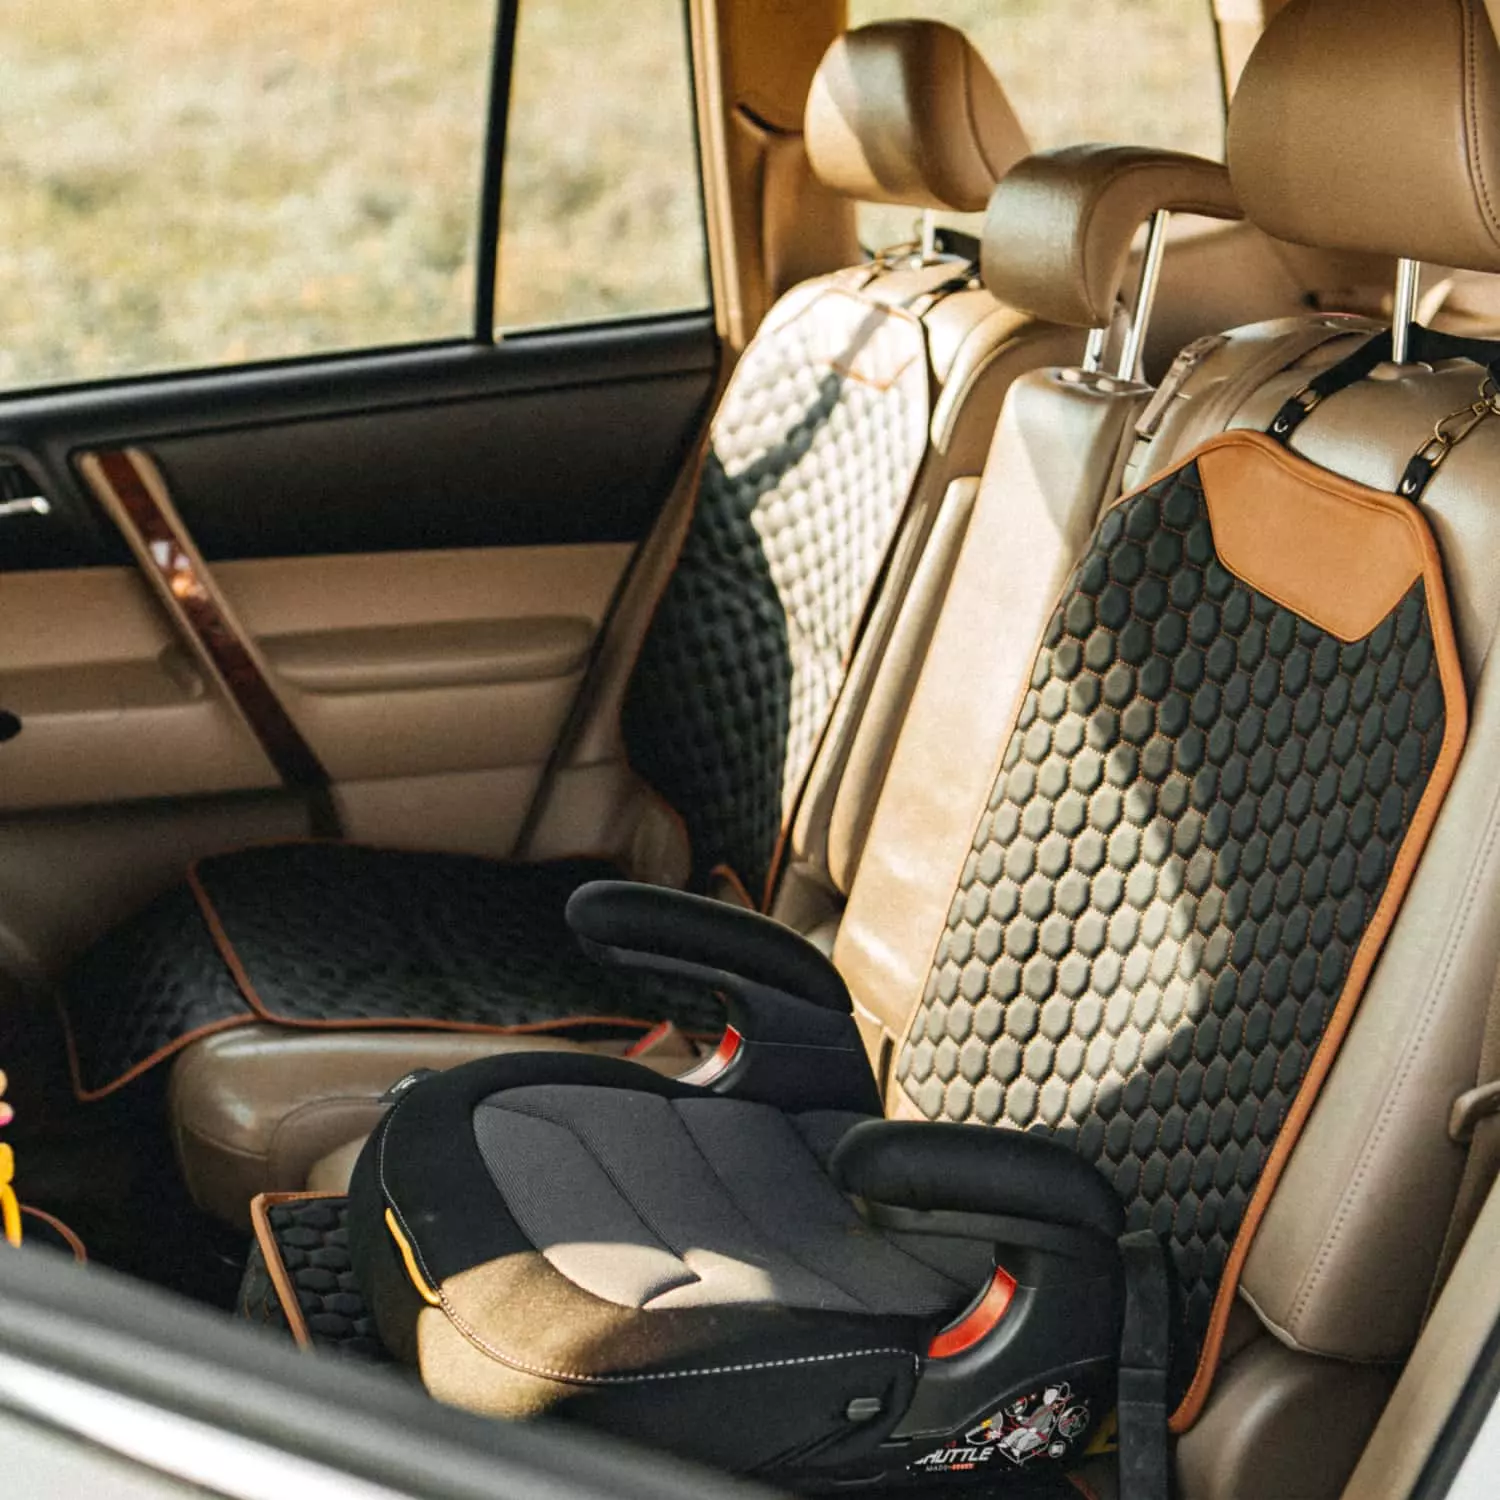 Car Backseat Kick Mat - Kid Proof Seat Protection - Prince Lionheart